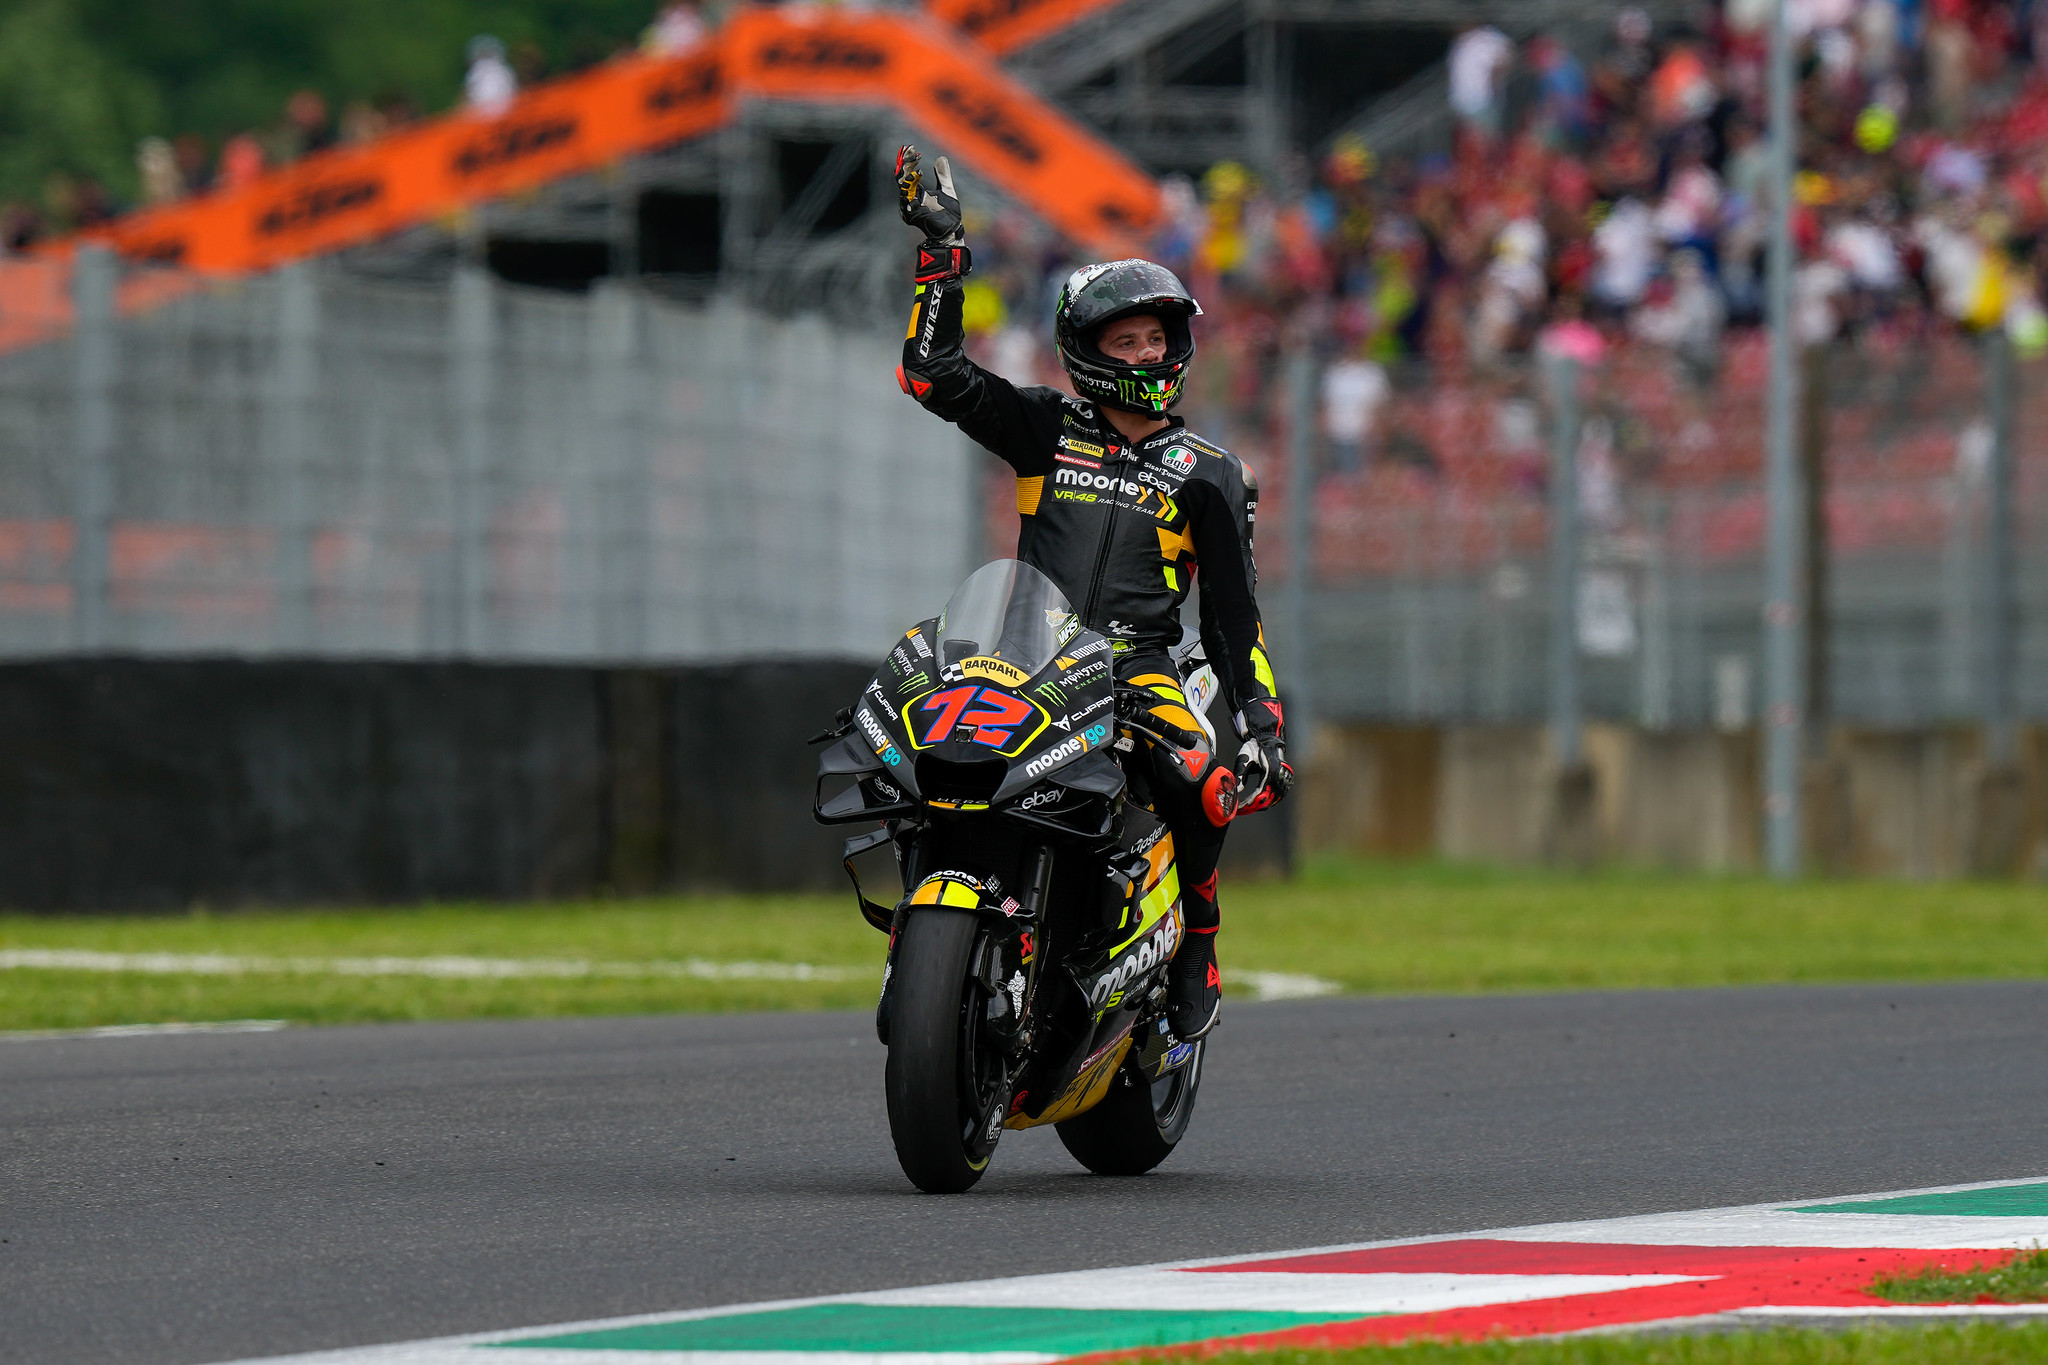 #72 Marco Bezzecchi - (ITA) - Mooney VR46 Racing Team - Ducati Desmosedici GP22